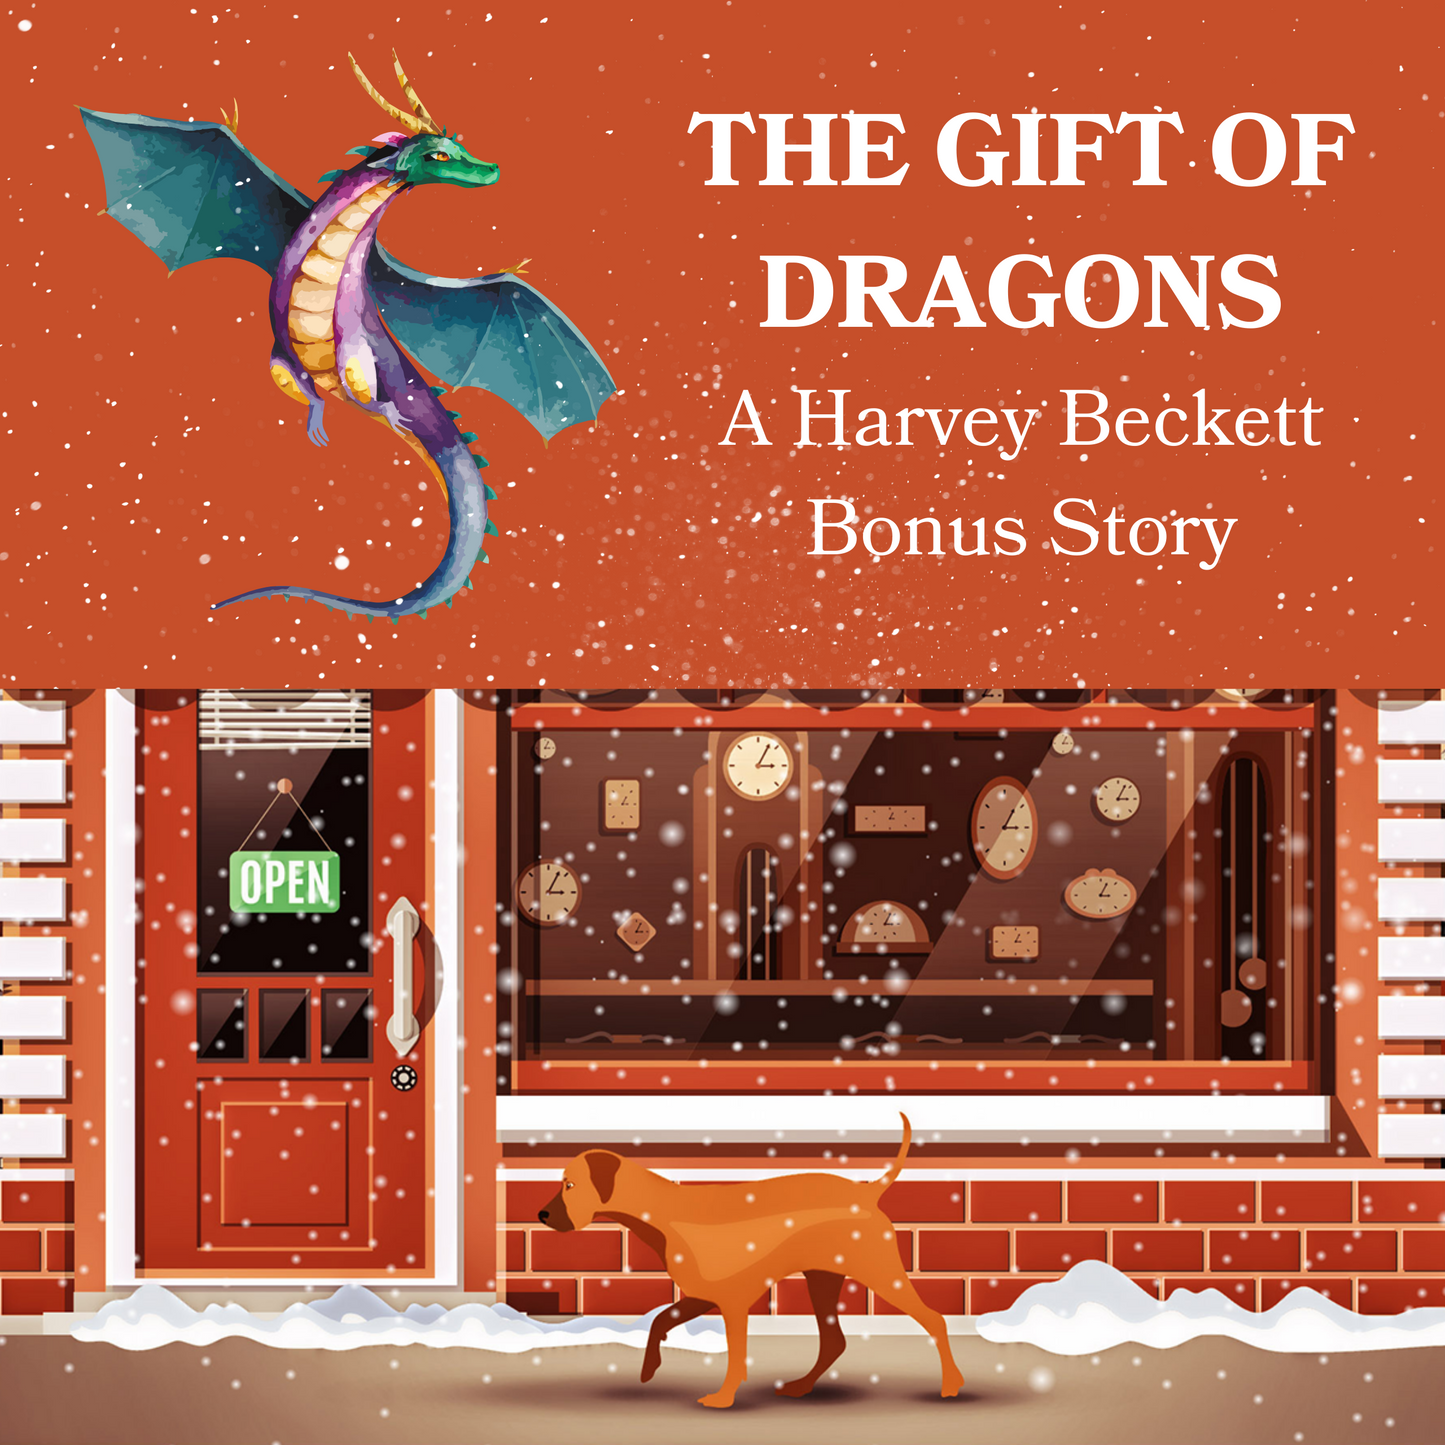 The Gift of Dragons—A Harvey Beckett Bonus Story